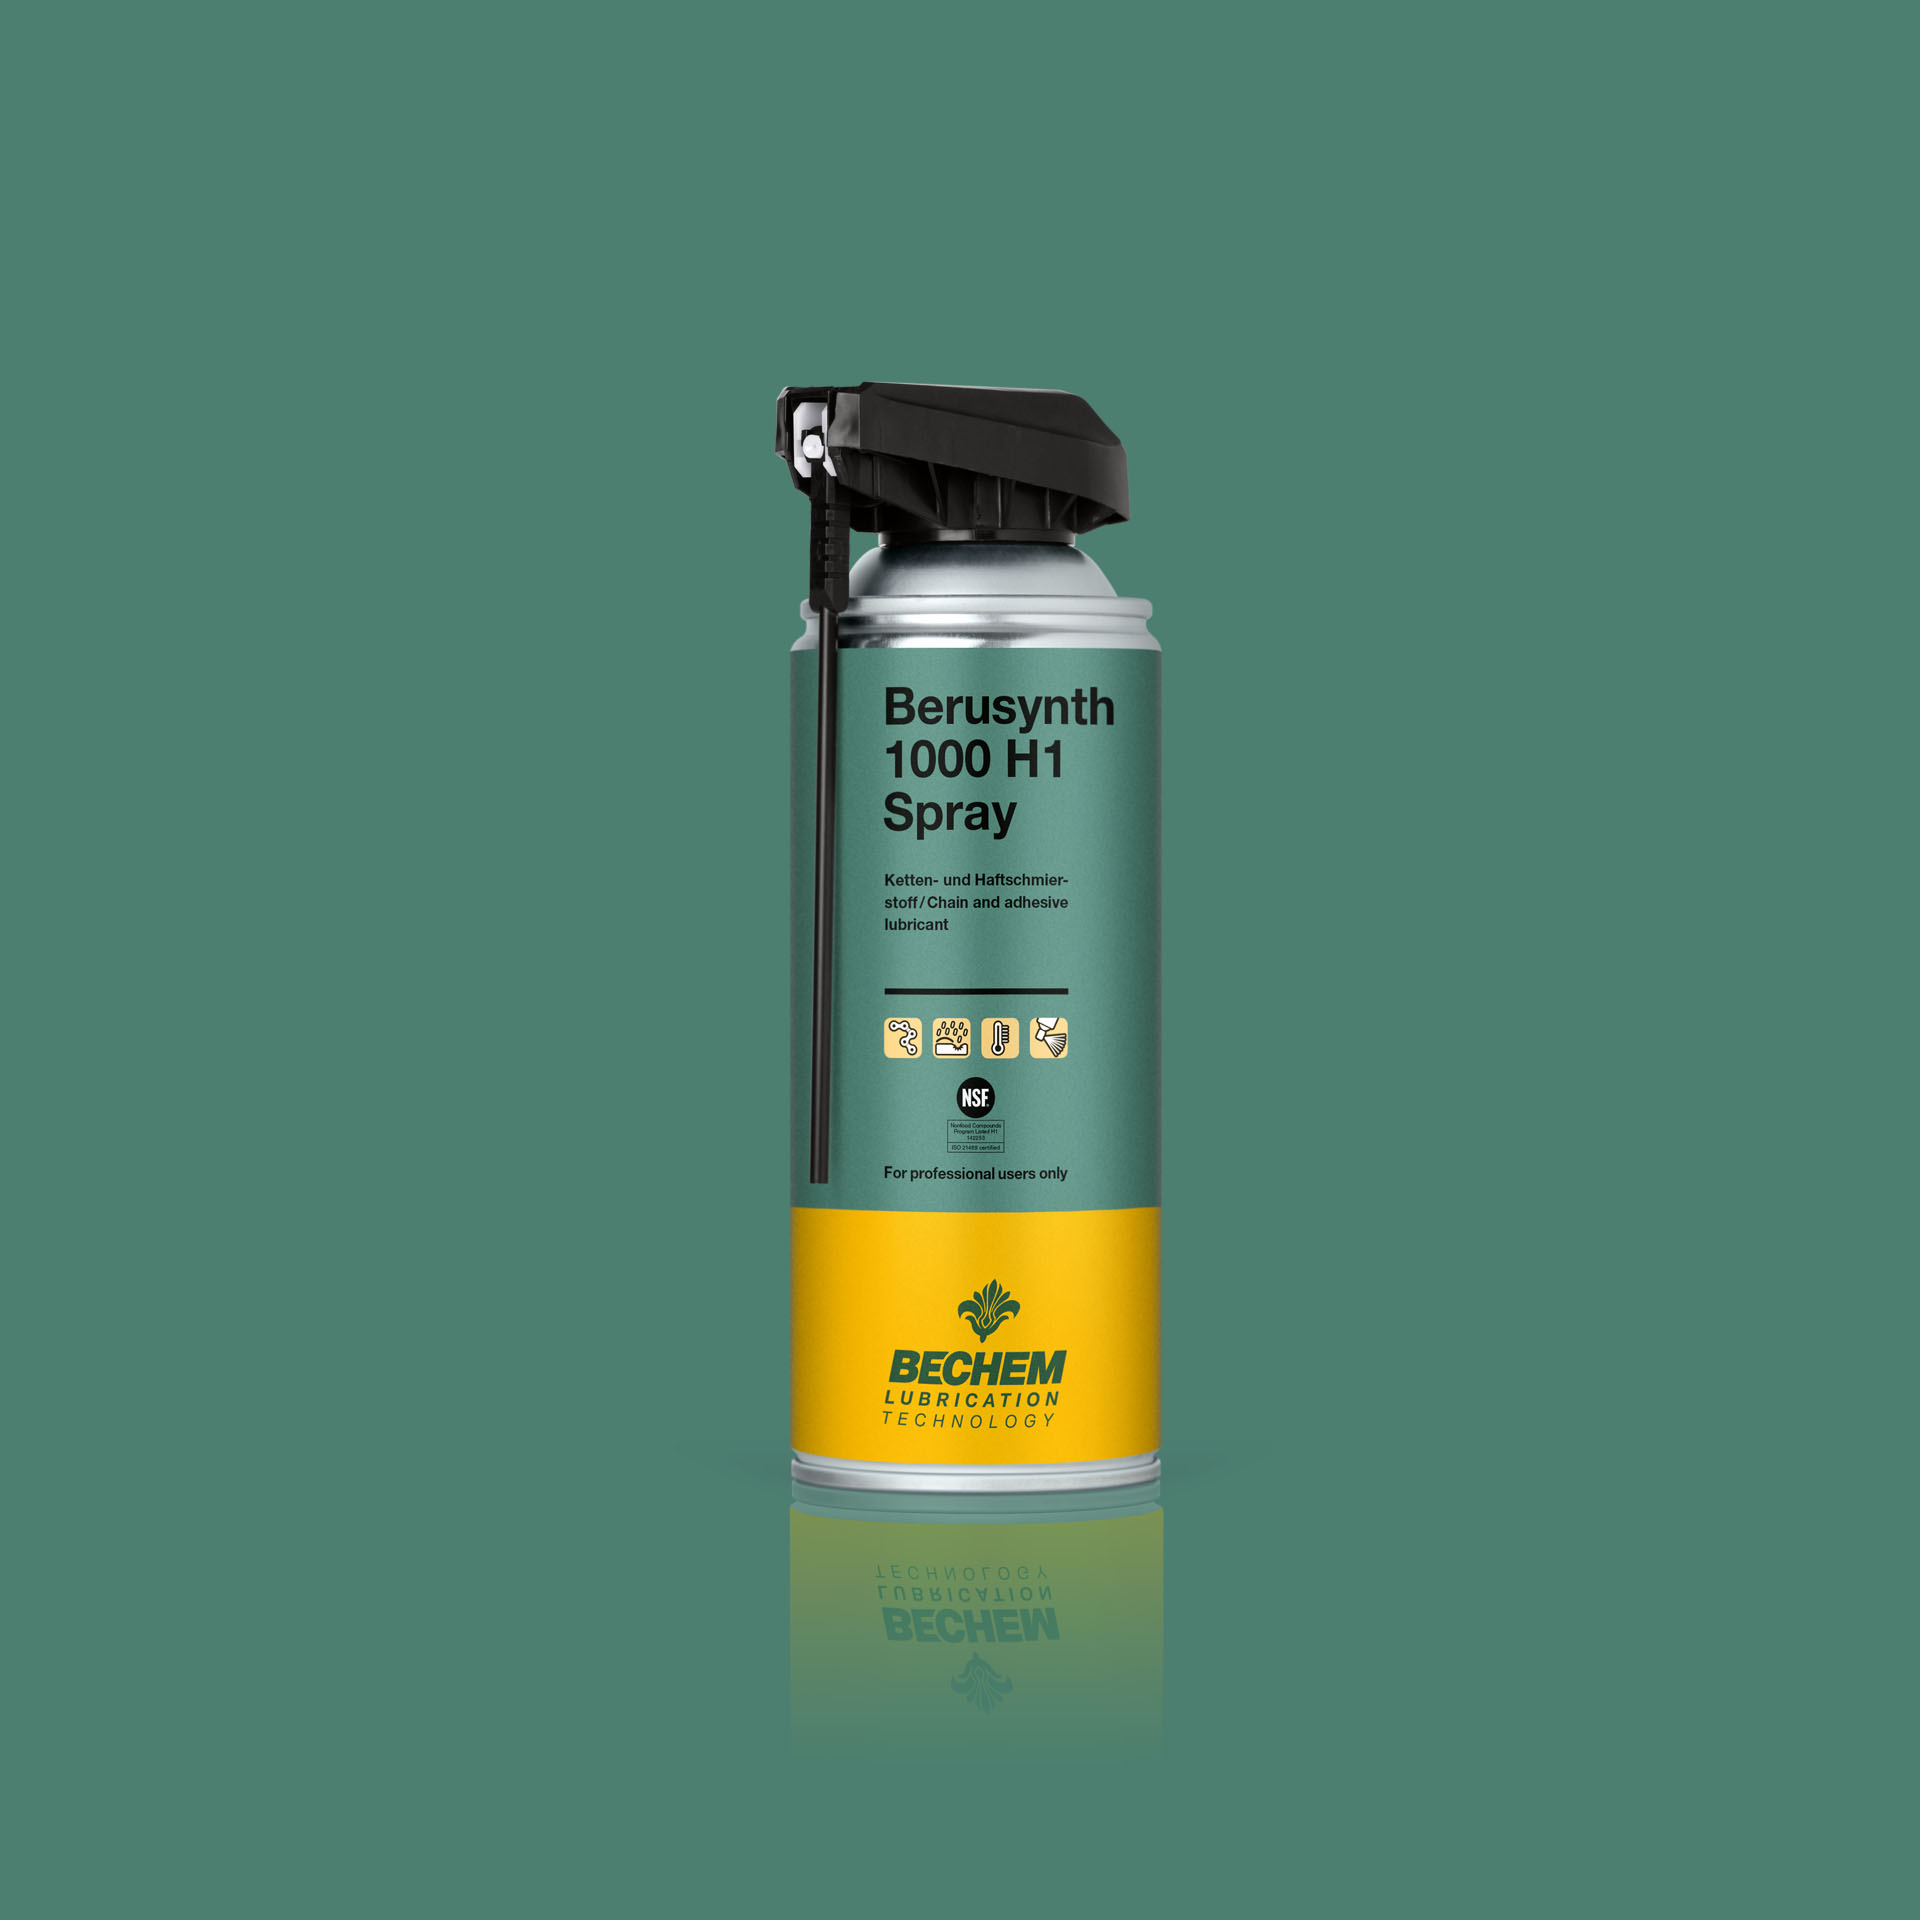 Bersynth 100 H1 Spray - 400 ml spray can